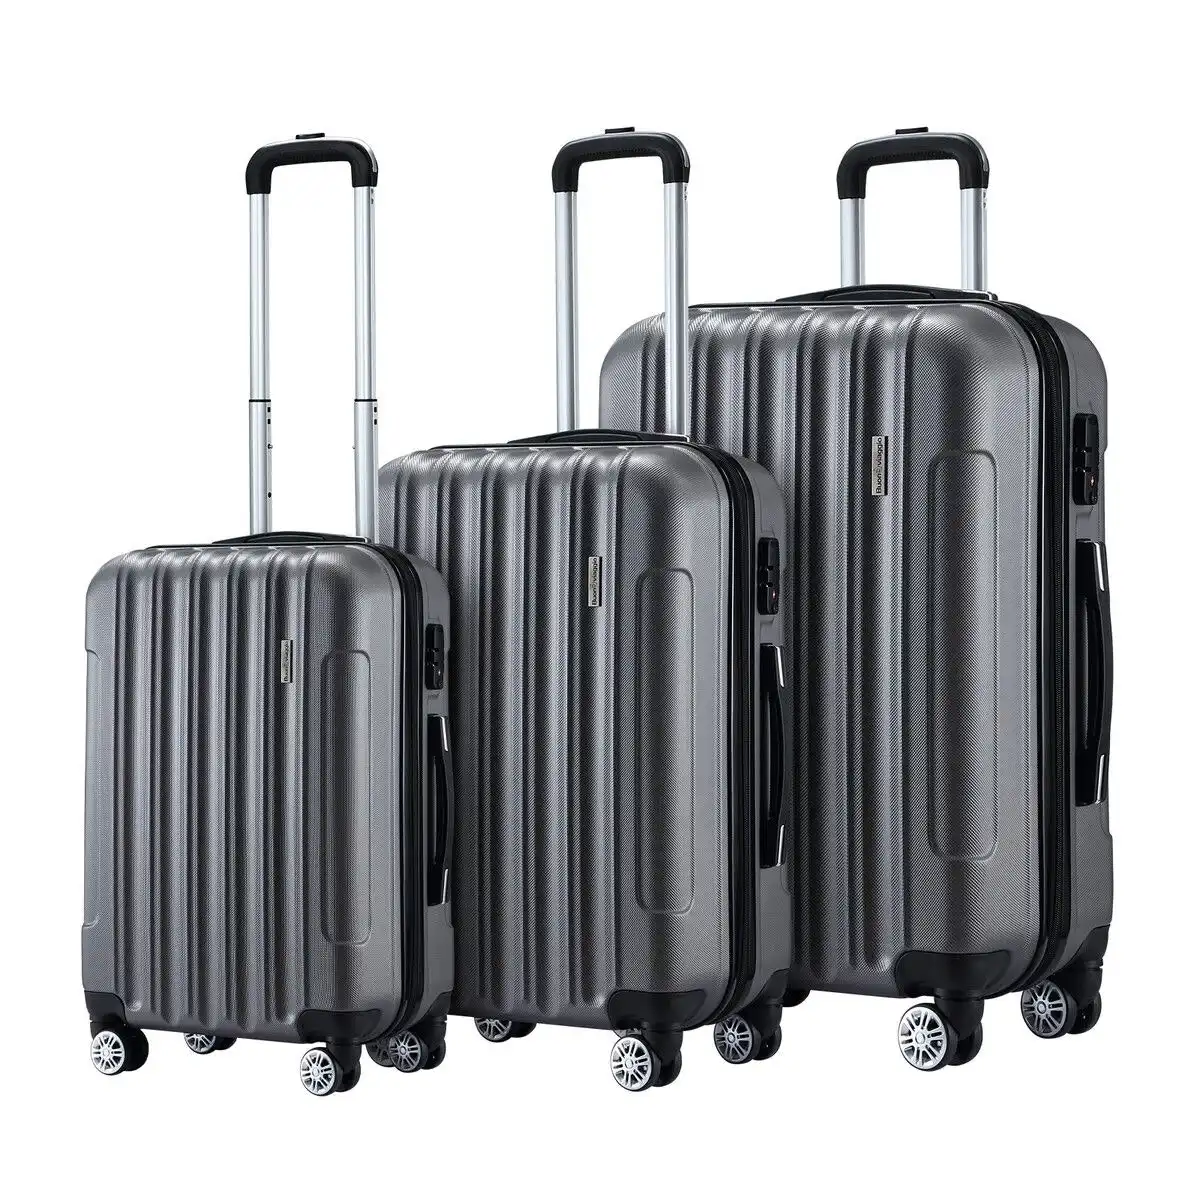 Buon Viaggio 3PCS Luggage Set Hard Carry On Travel Suitcases Trolley Lightweight with TSA Lock 2 Covers Dark Grey